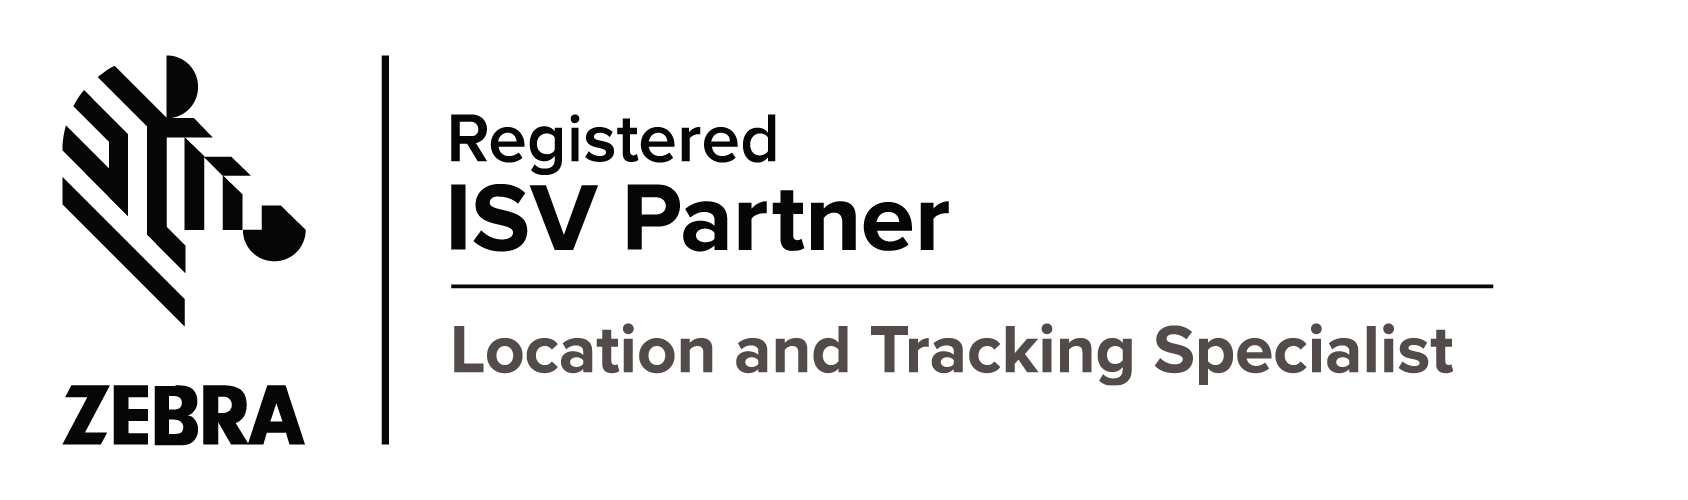 Zebra Registered ISV Partner - Location and Tracking Specialist